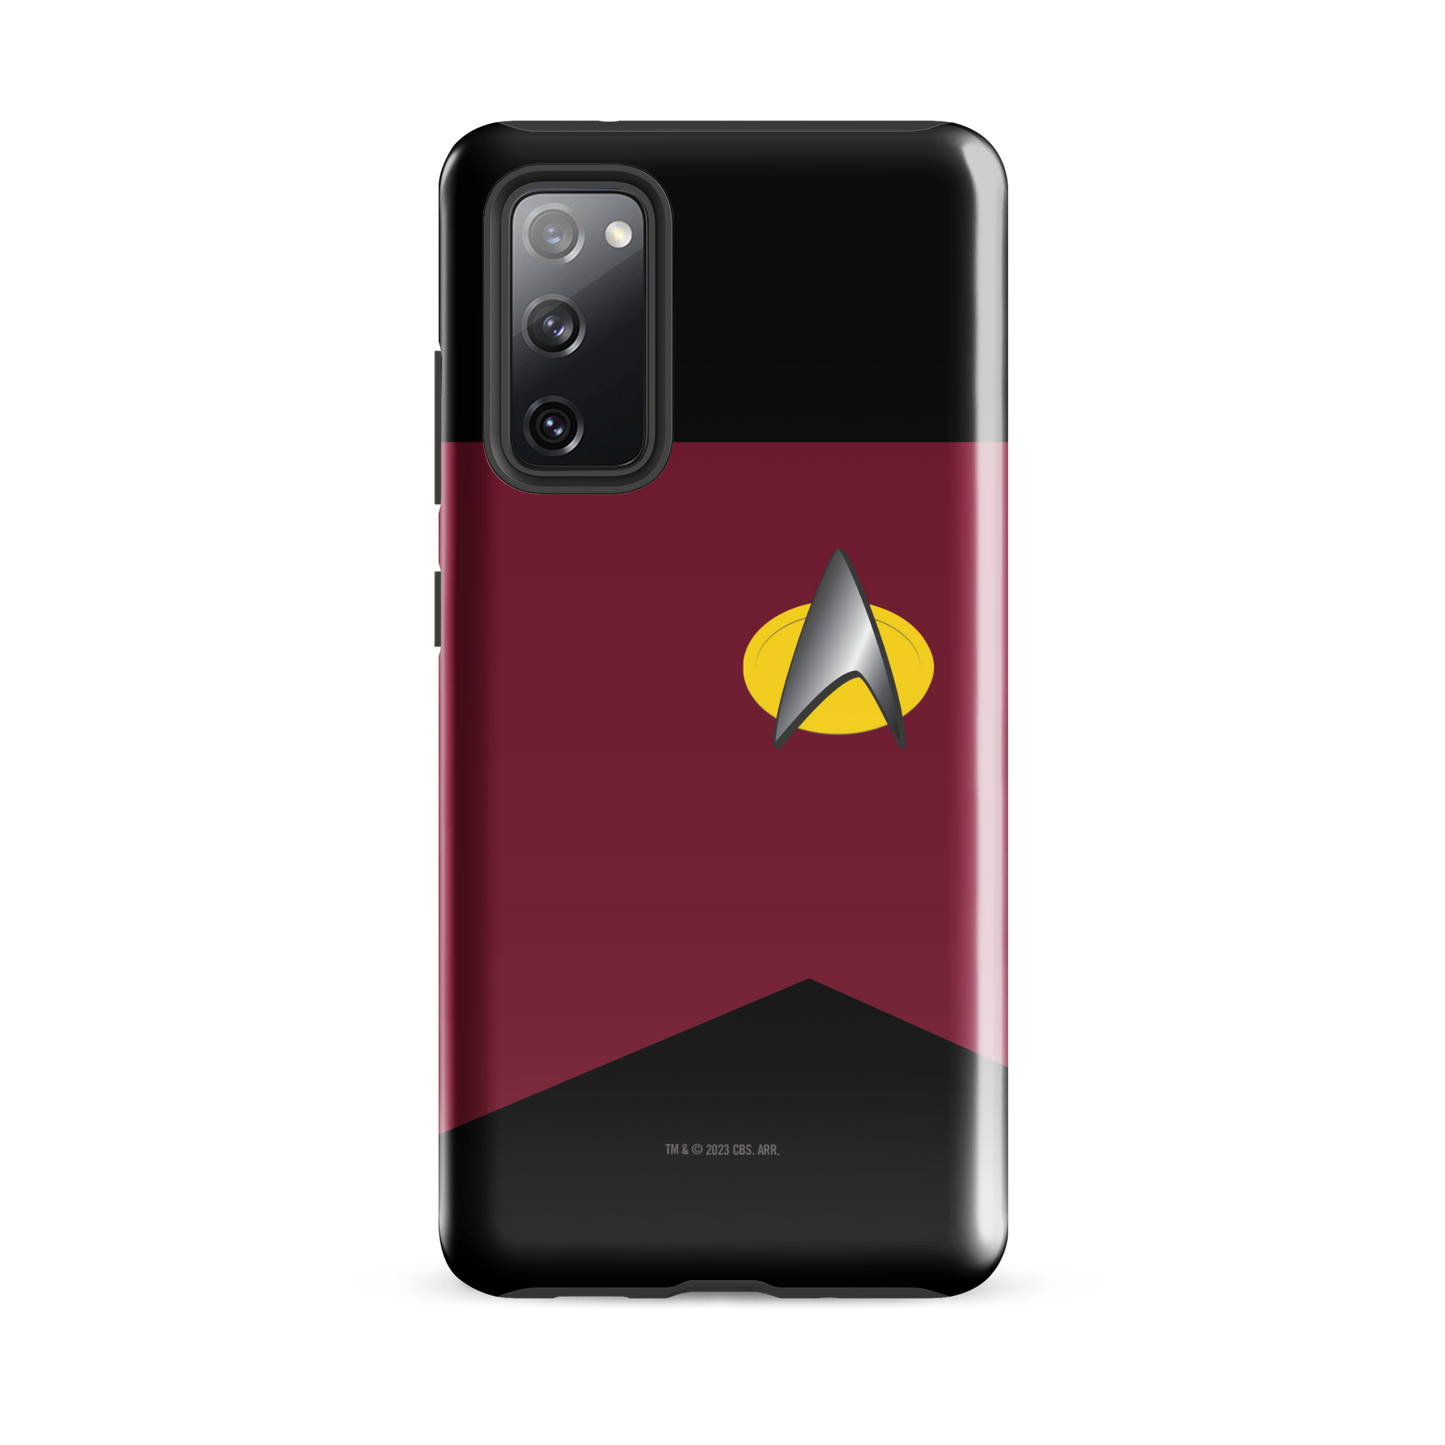 Star Trek: The Next Generation Funda Commander Tough para teléfono - Samsung